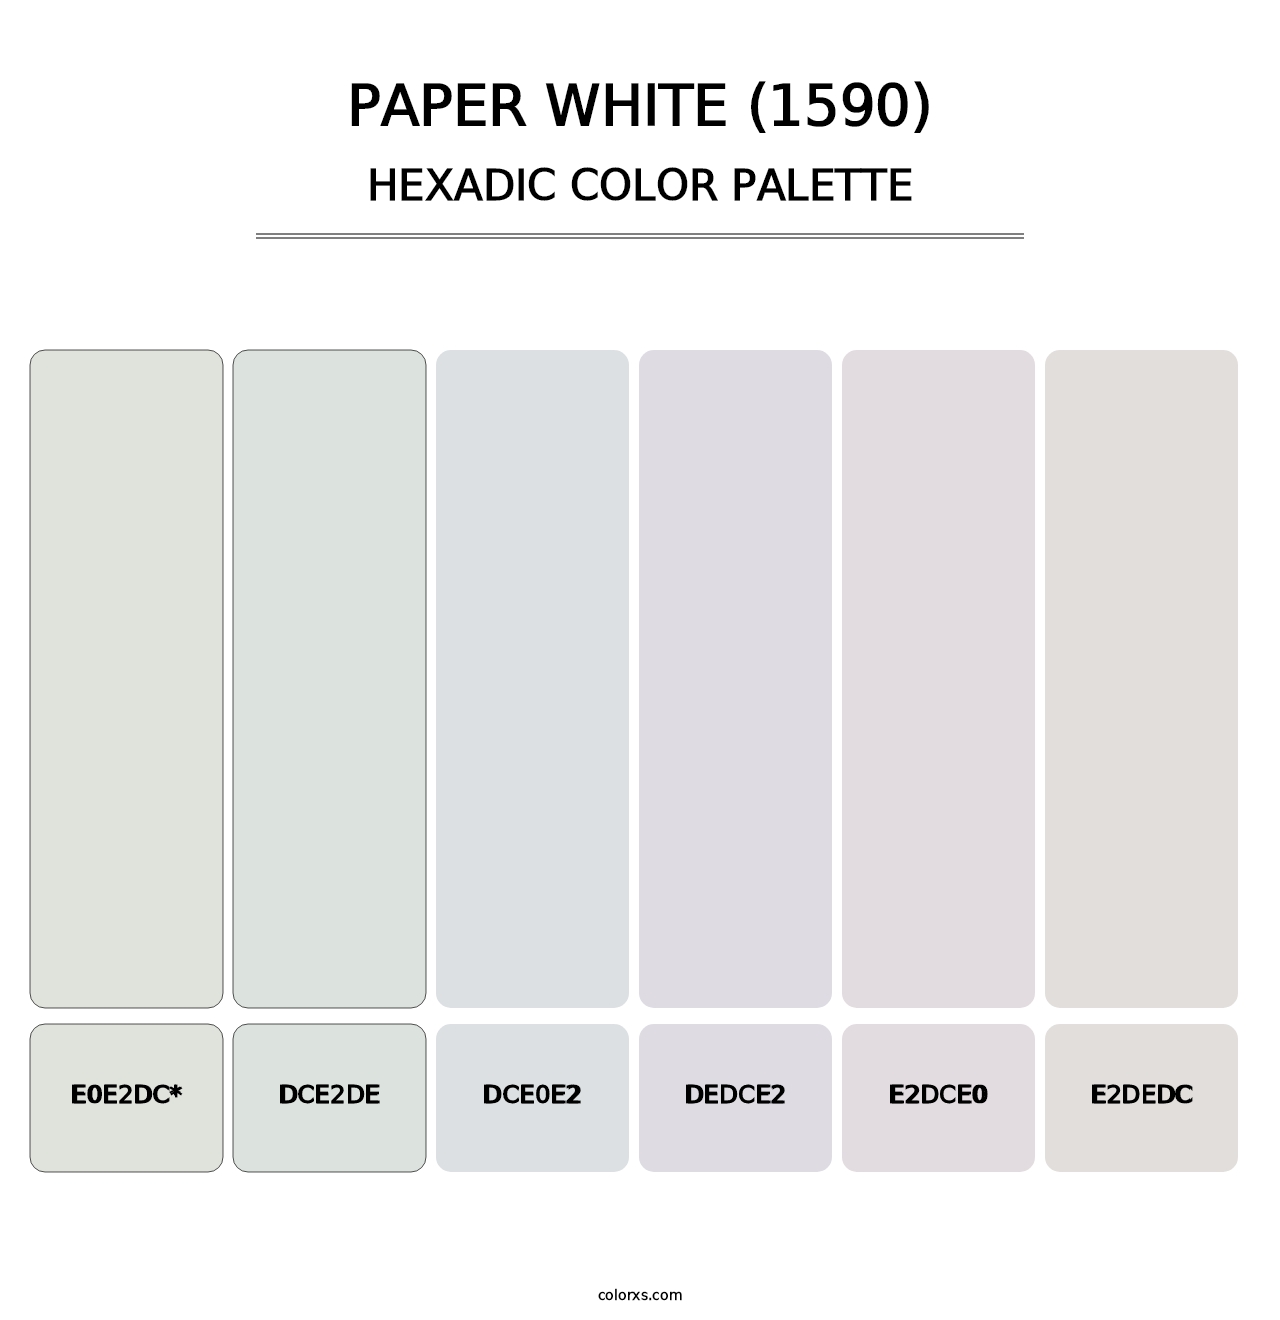 Paper White (1590) - Hexadic Color Palette